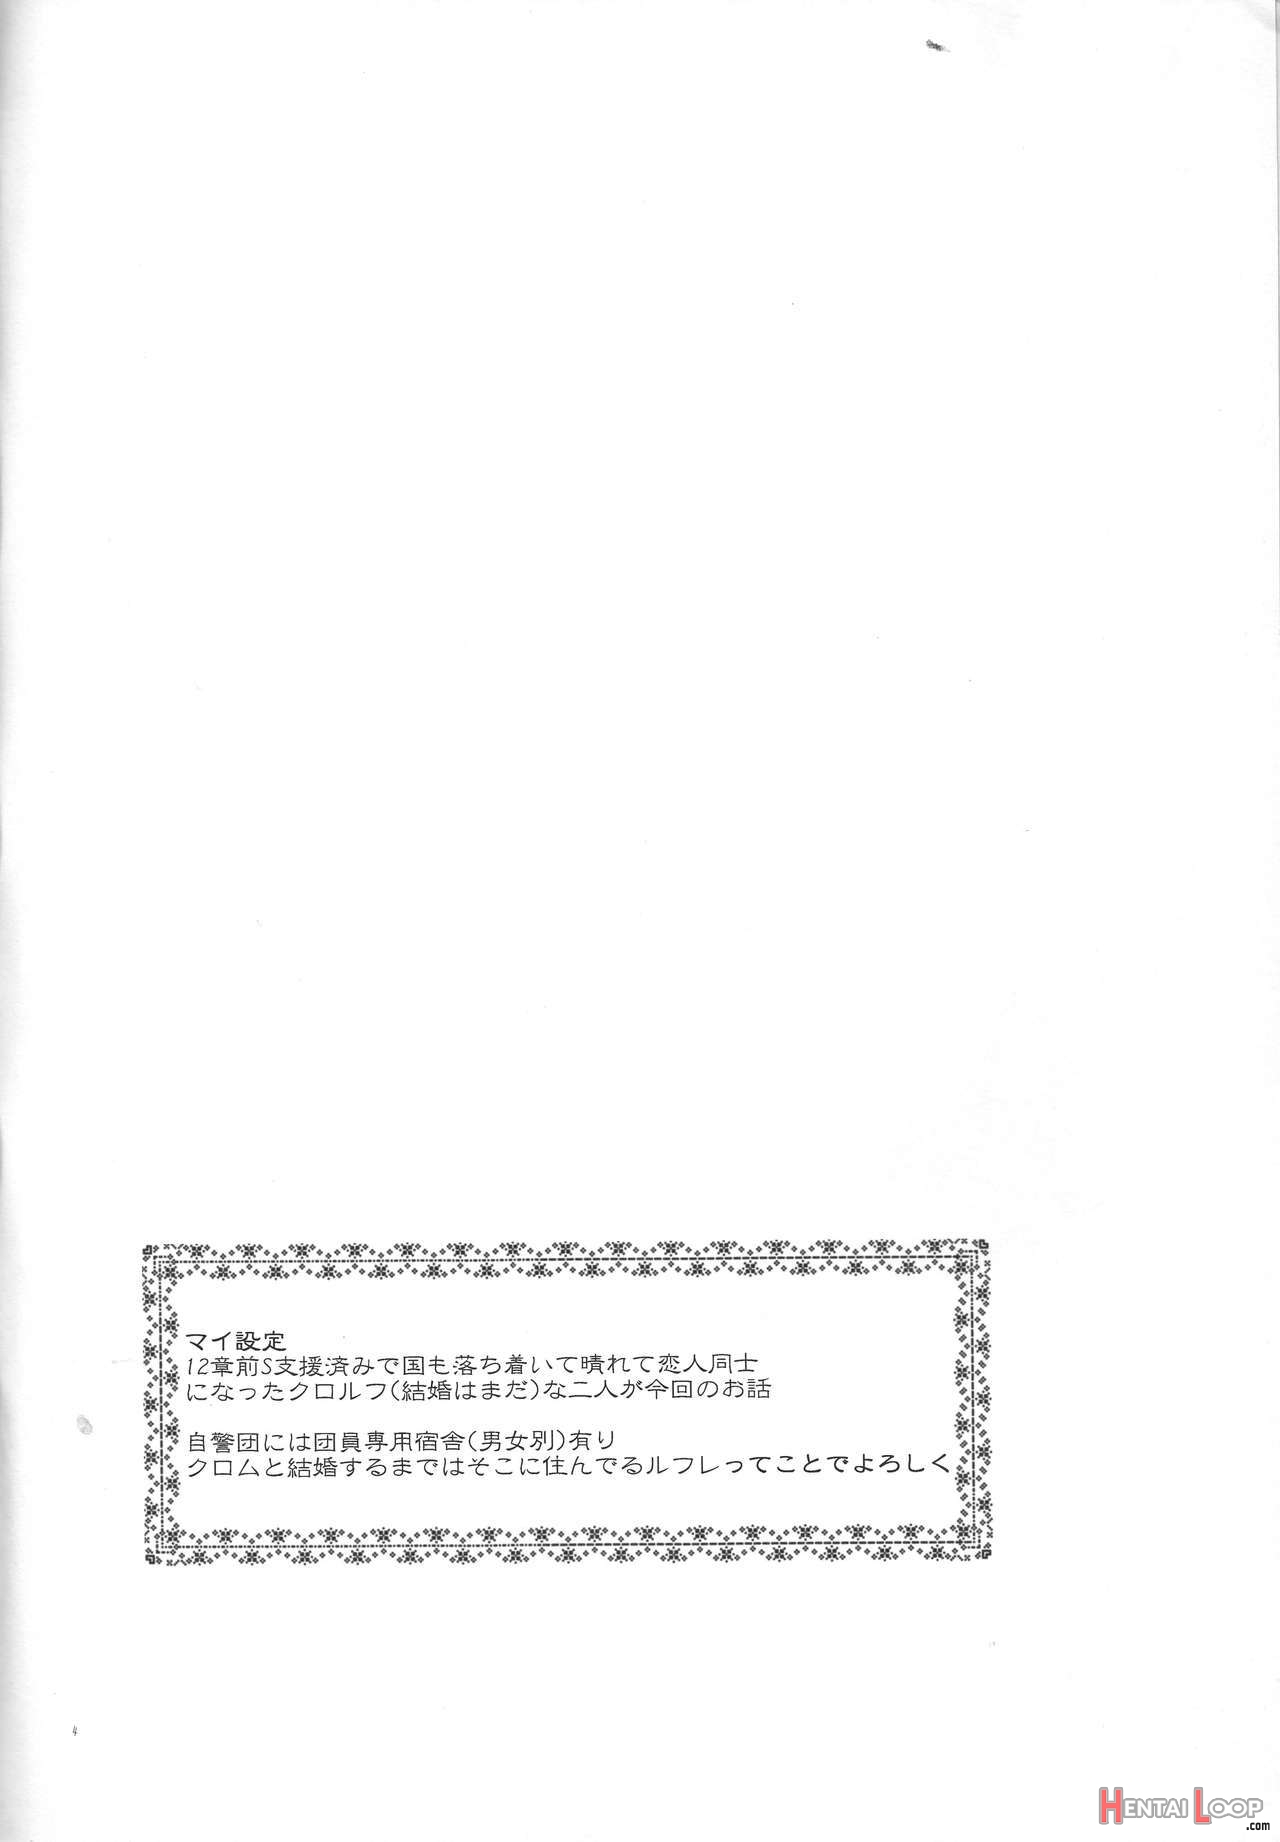 Kurorufu page 4